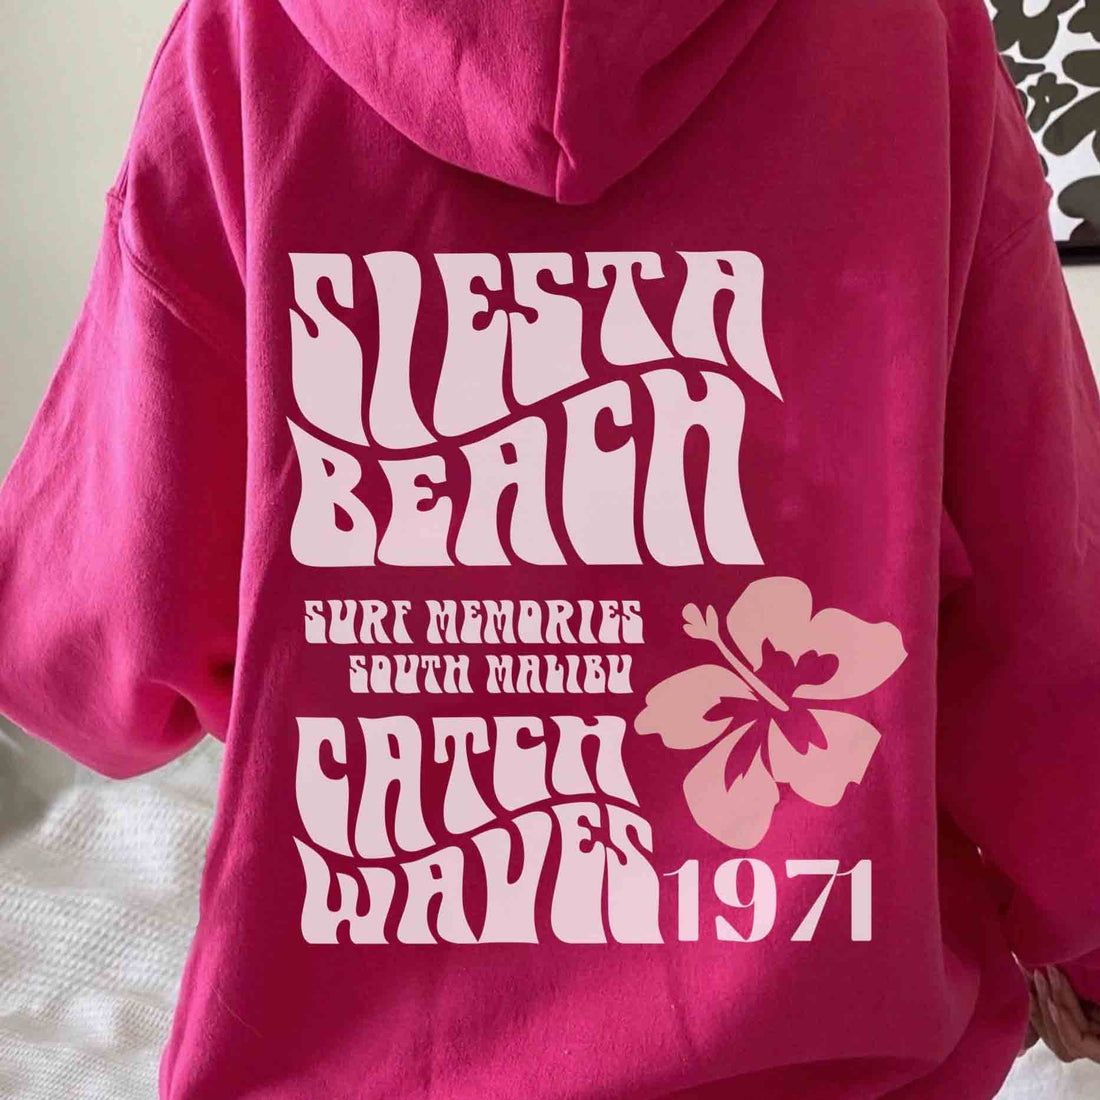 Siesta Beach Surf Memories South Malibu Catch Waves 1971 Print Women&